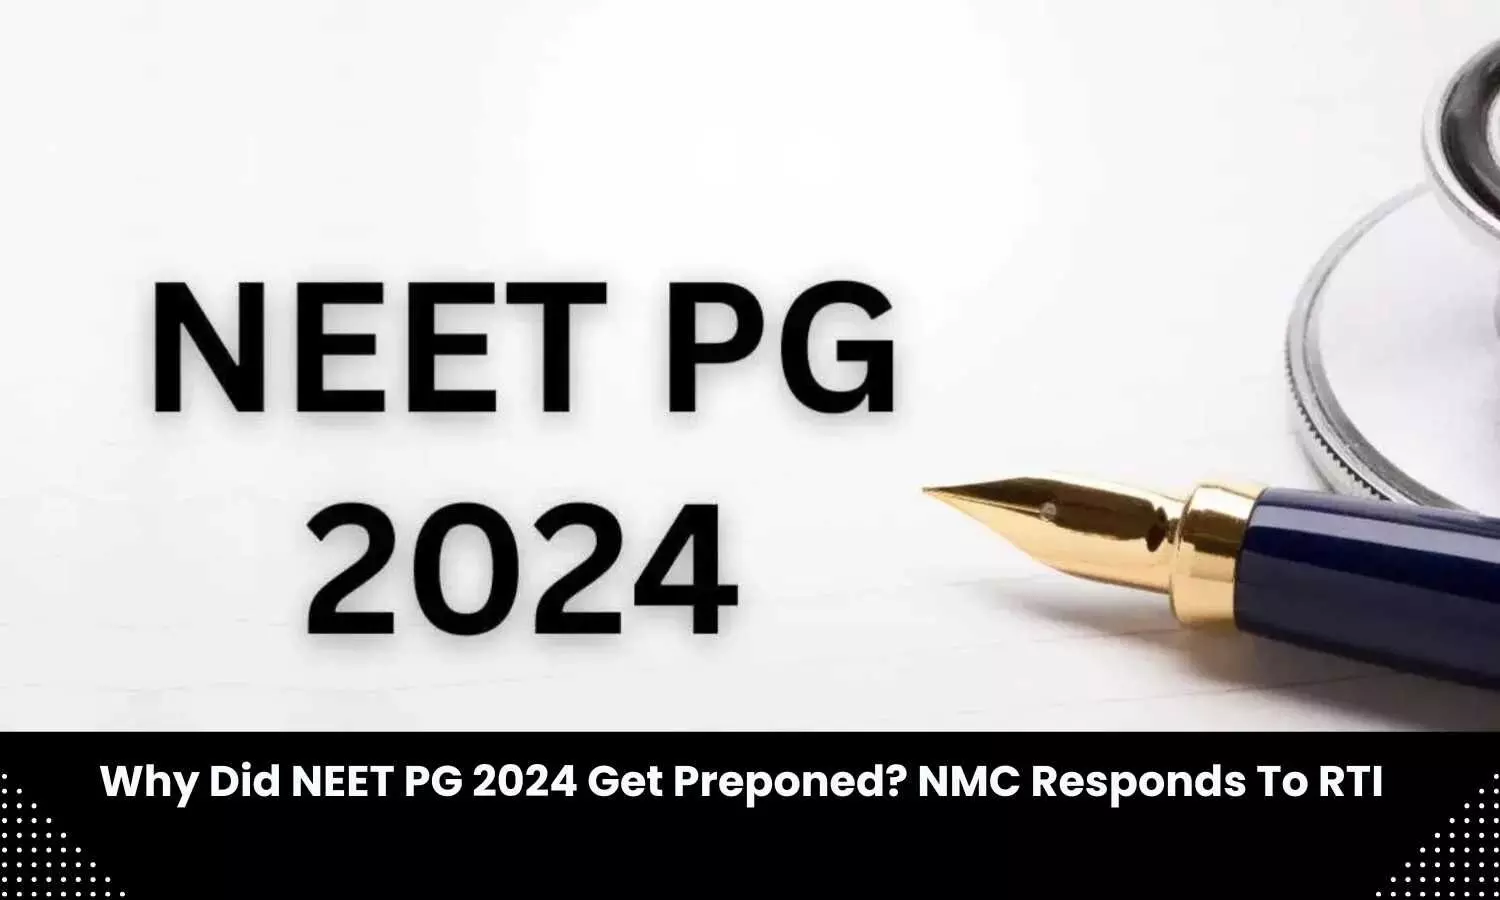 NEET PG 2024 preponement, RTI filed before NMC